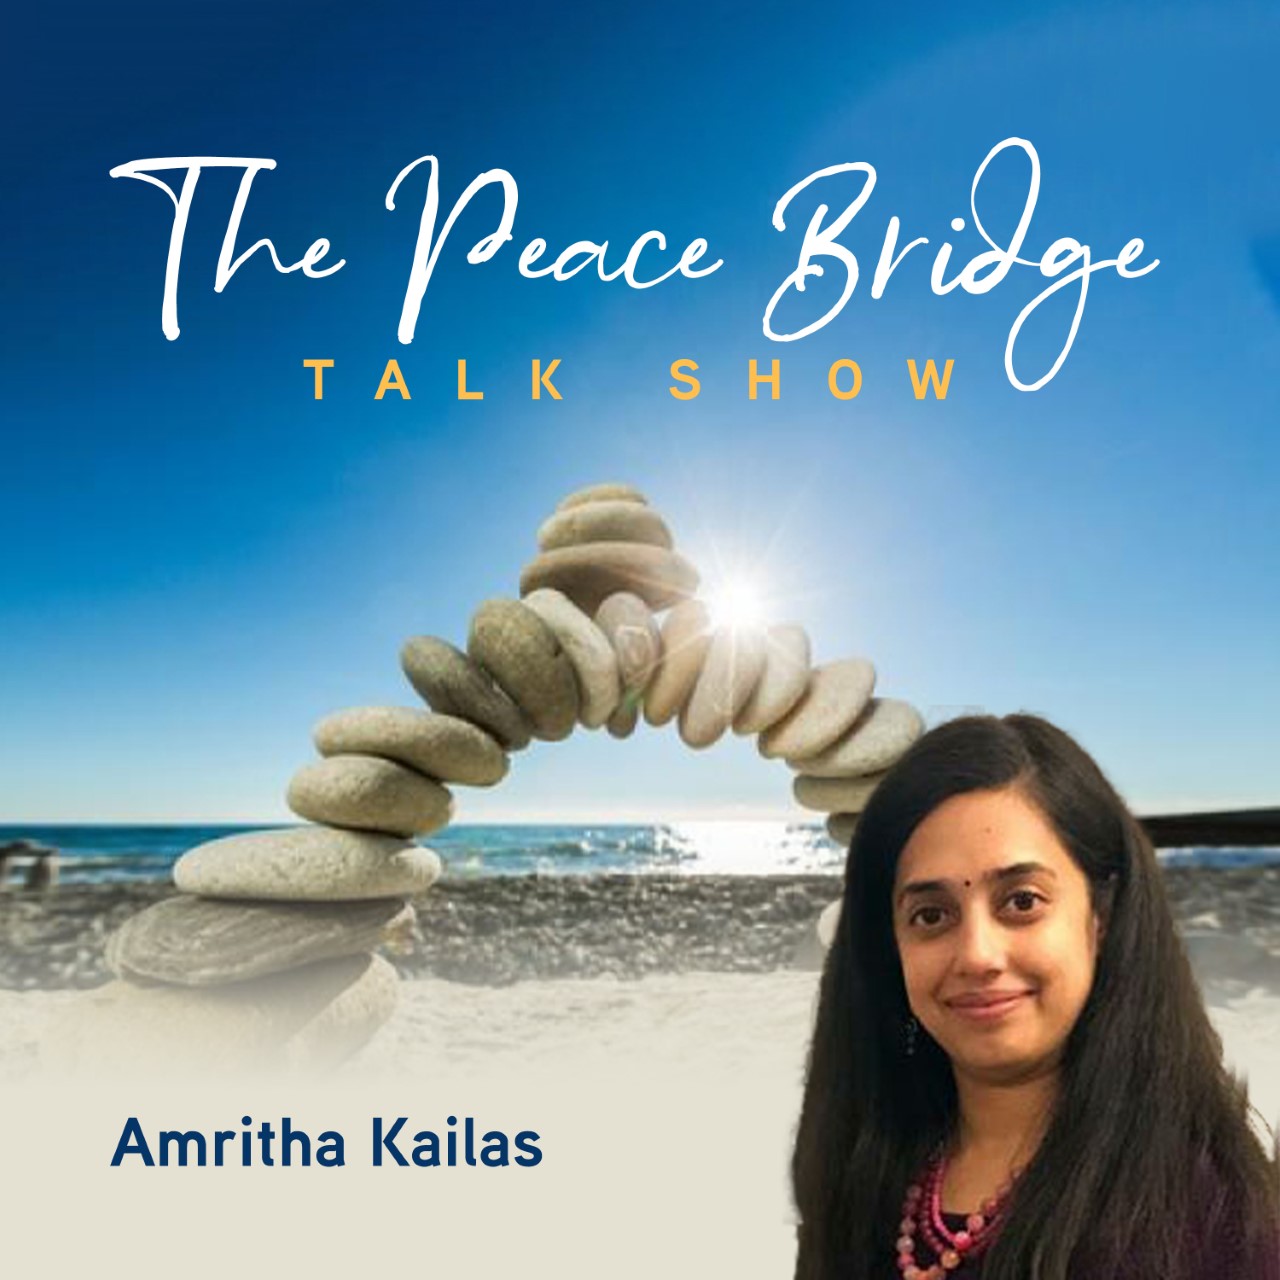 The Peace Bridge Talk Show Coming Soon on Voice America !!